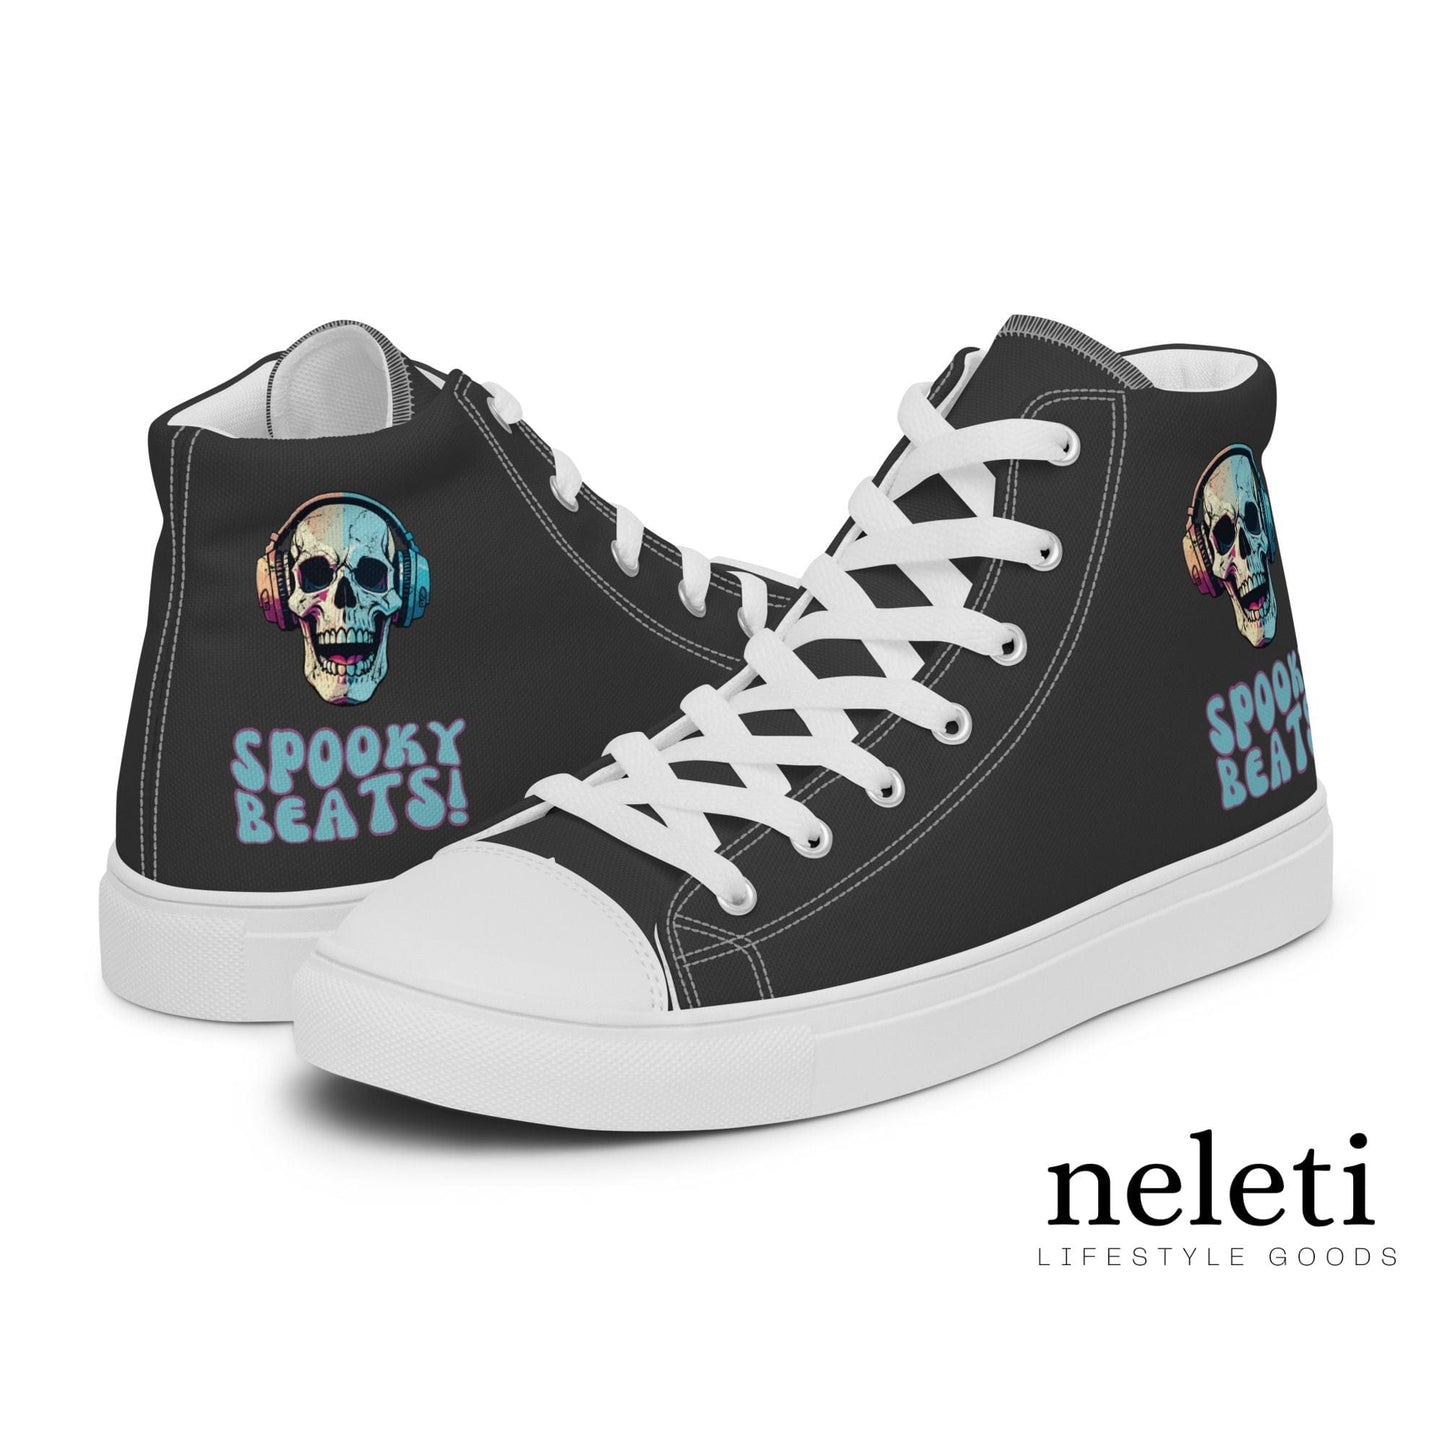 neleti.com-halloween-shoes-for-women